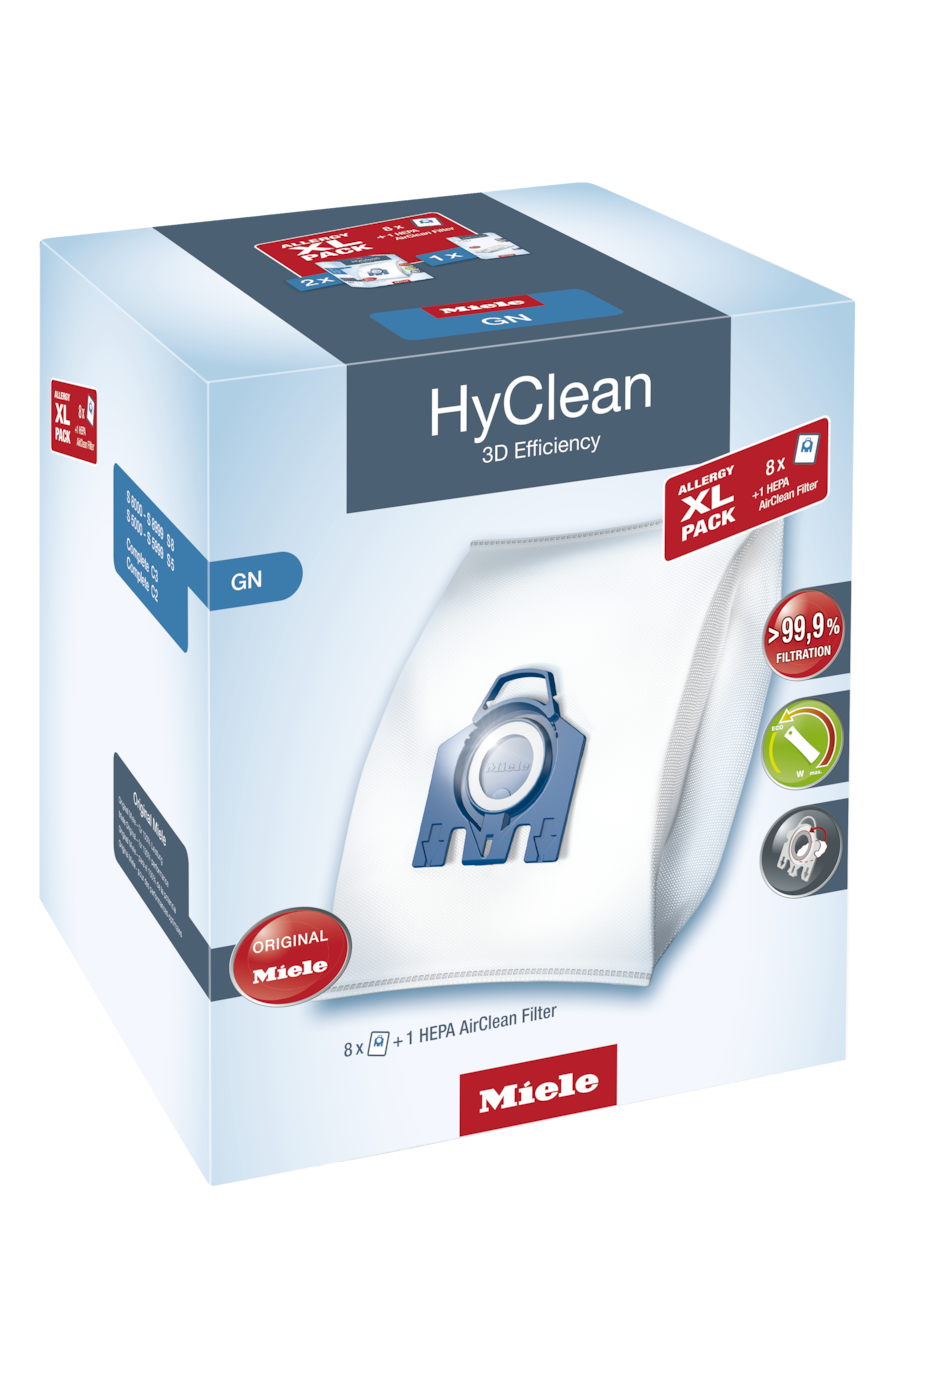 GN Allergy XL HyClean 3D - Комплект мешков-пылесборников Allergy XL Pack HyClean 3D Efficiency GN 